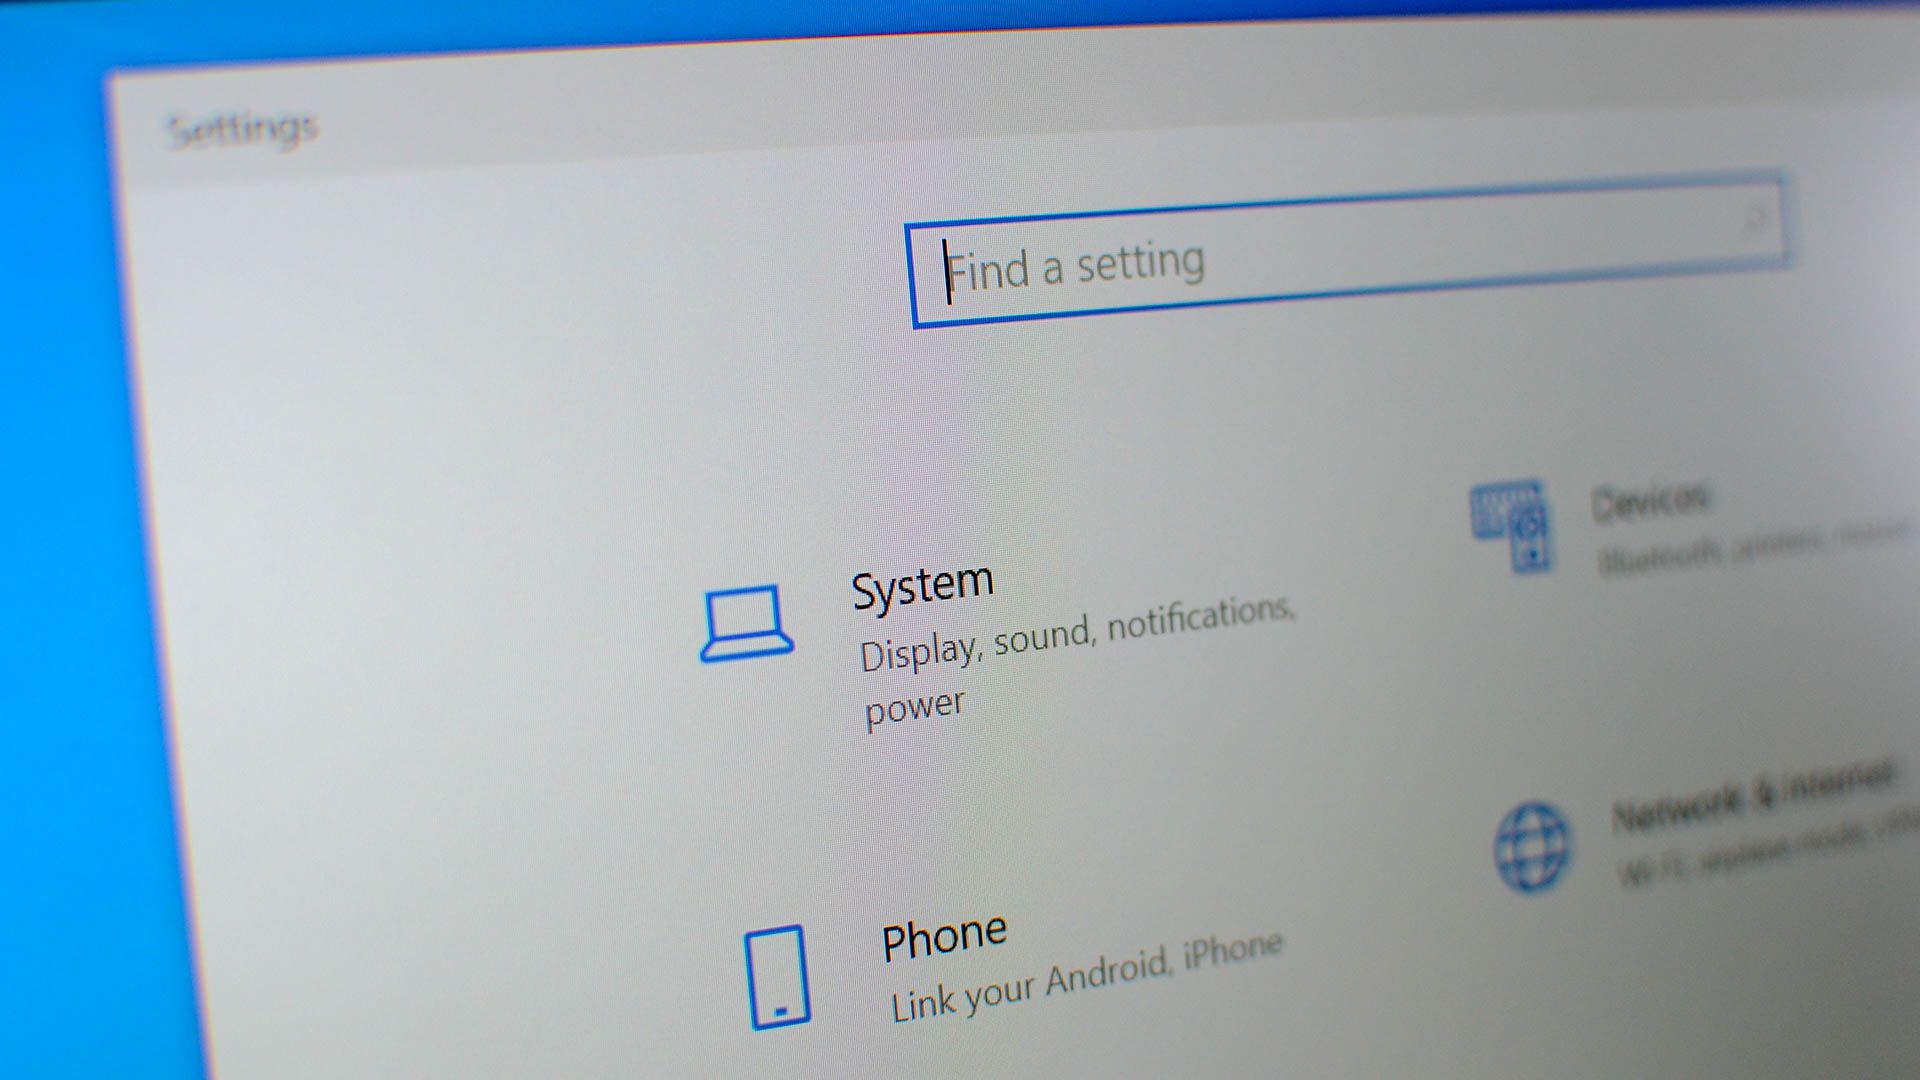 The Settings app open on Windows 10. 